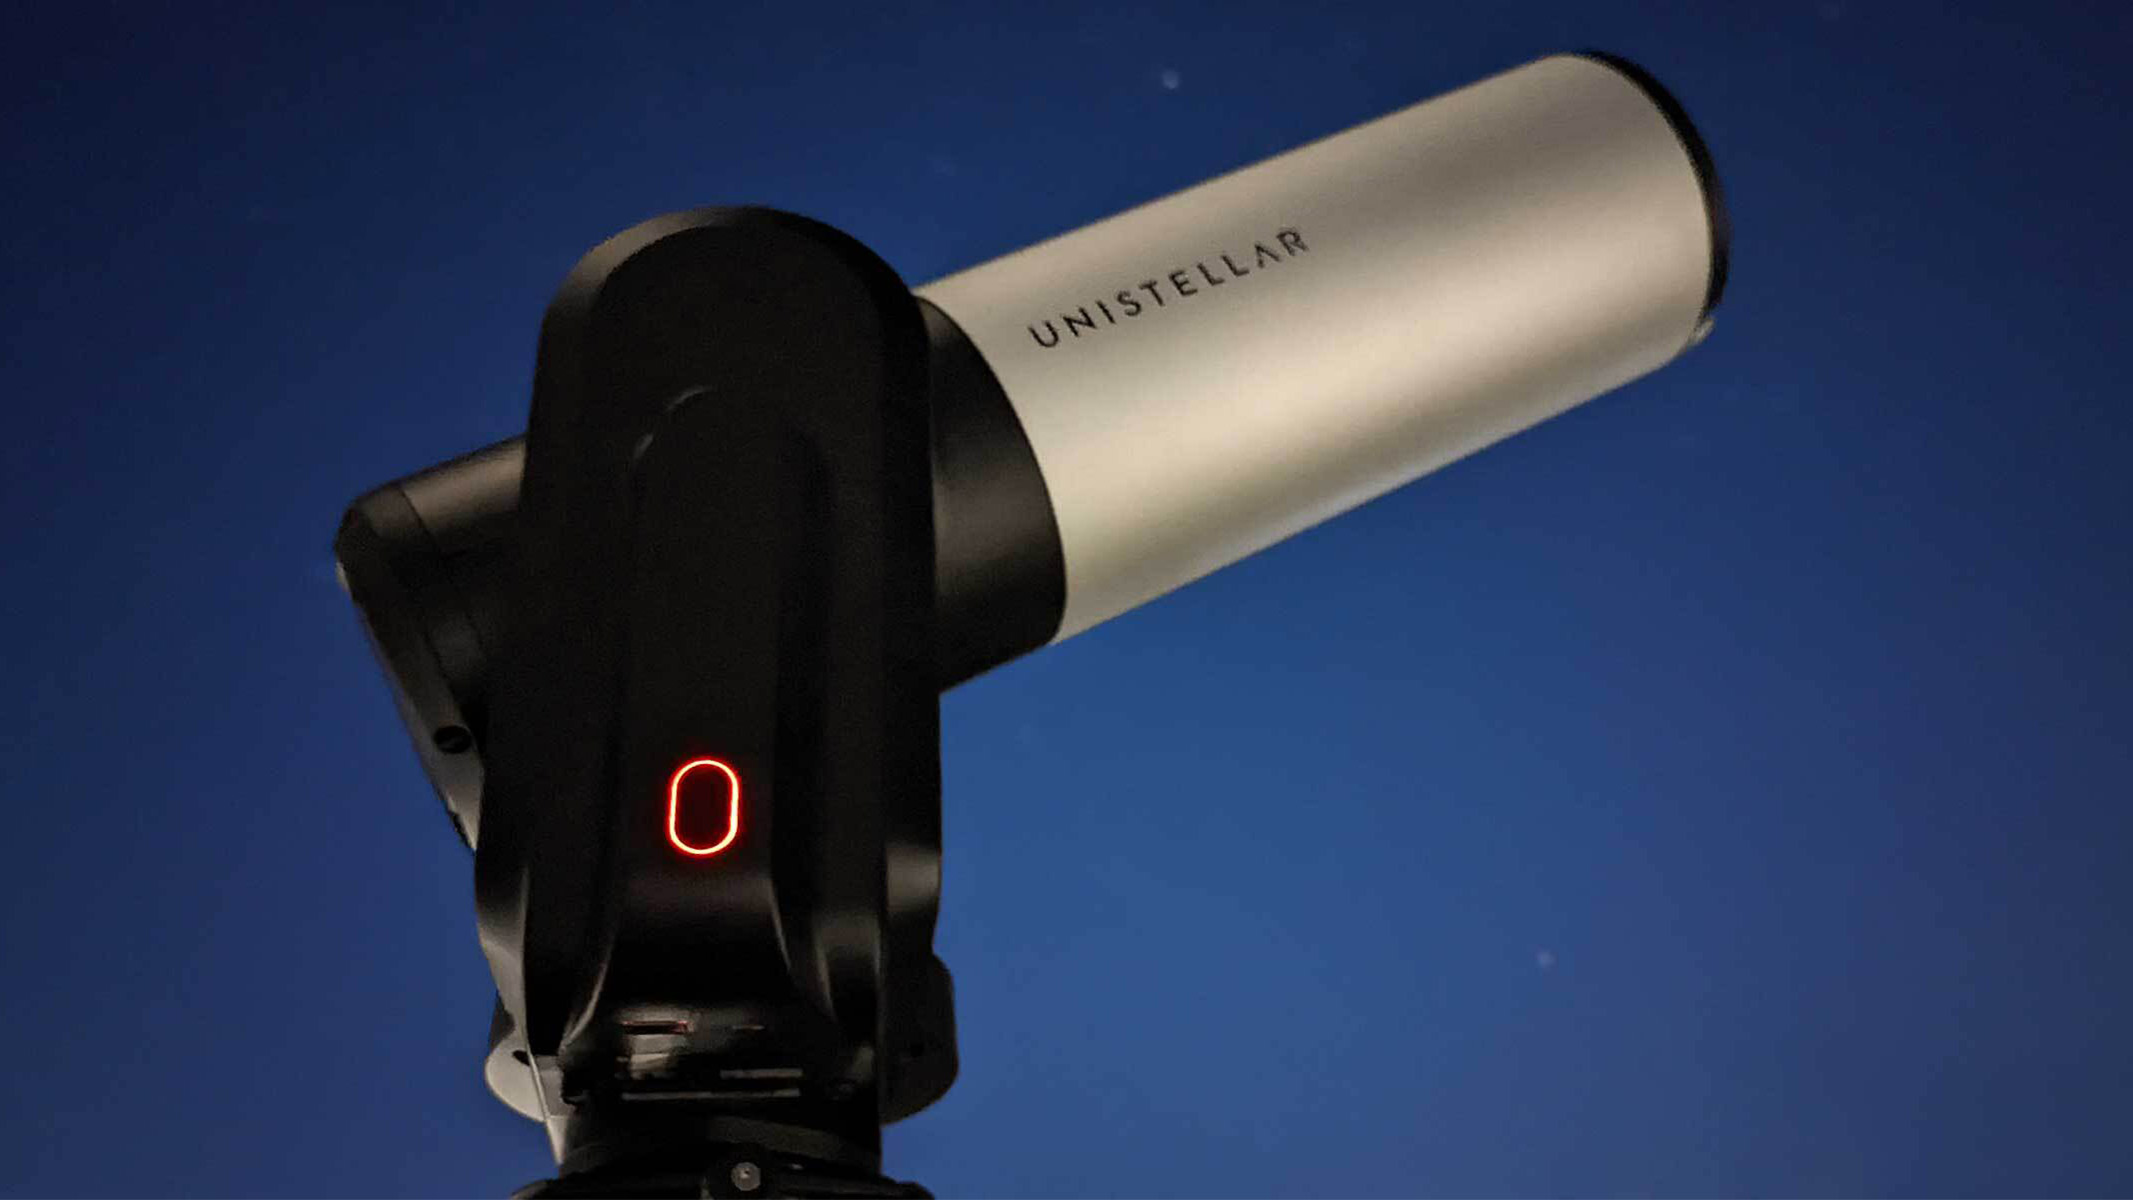 Unistellar evscope 2 image review